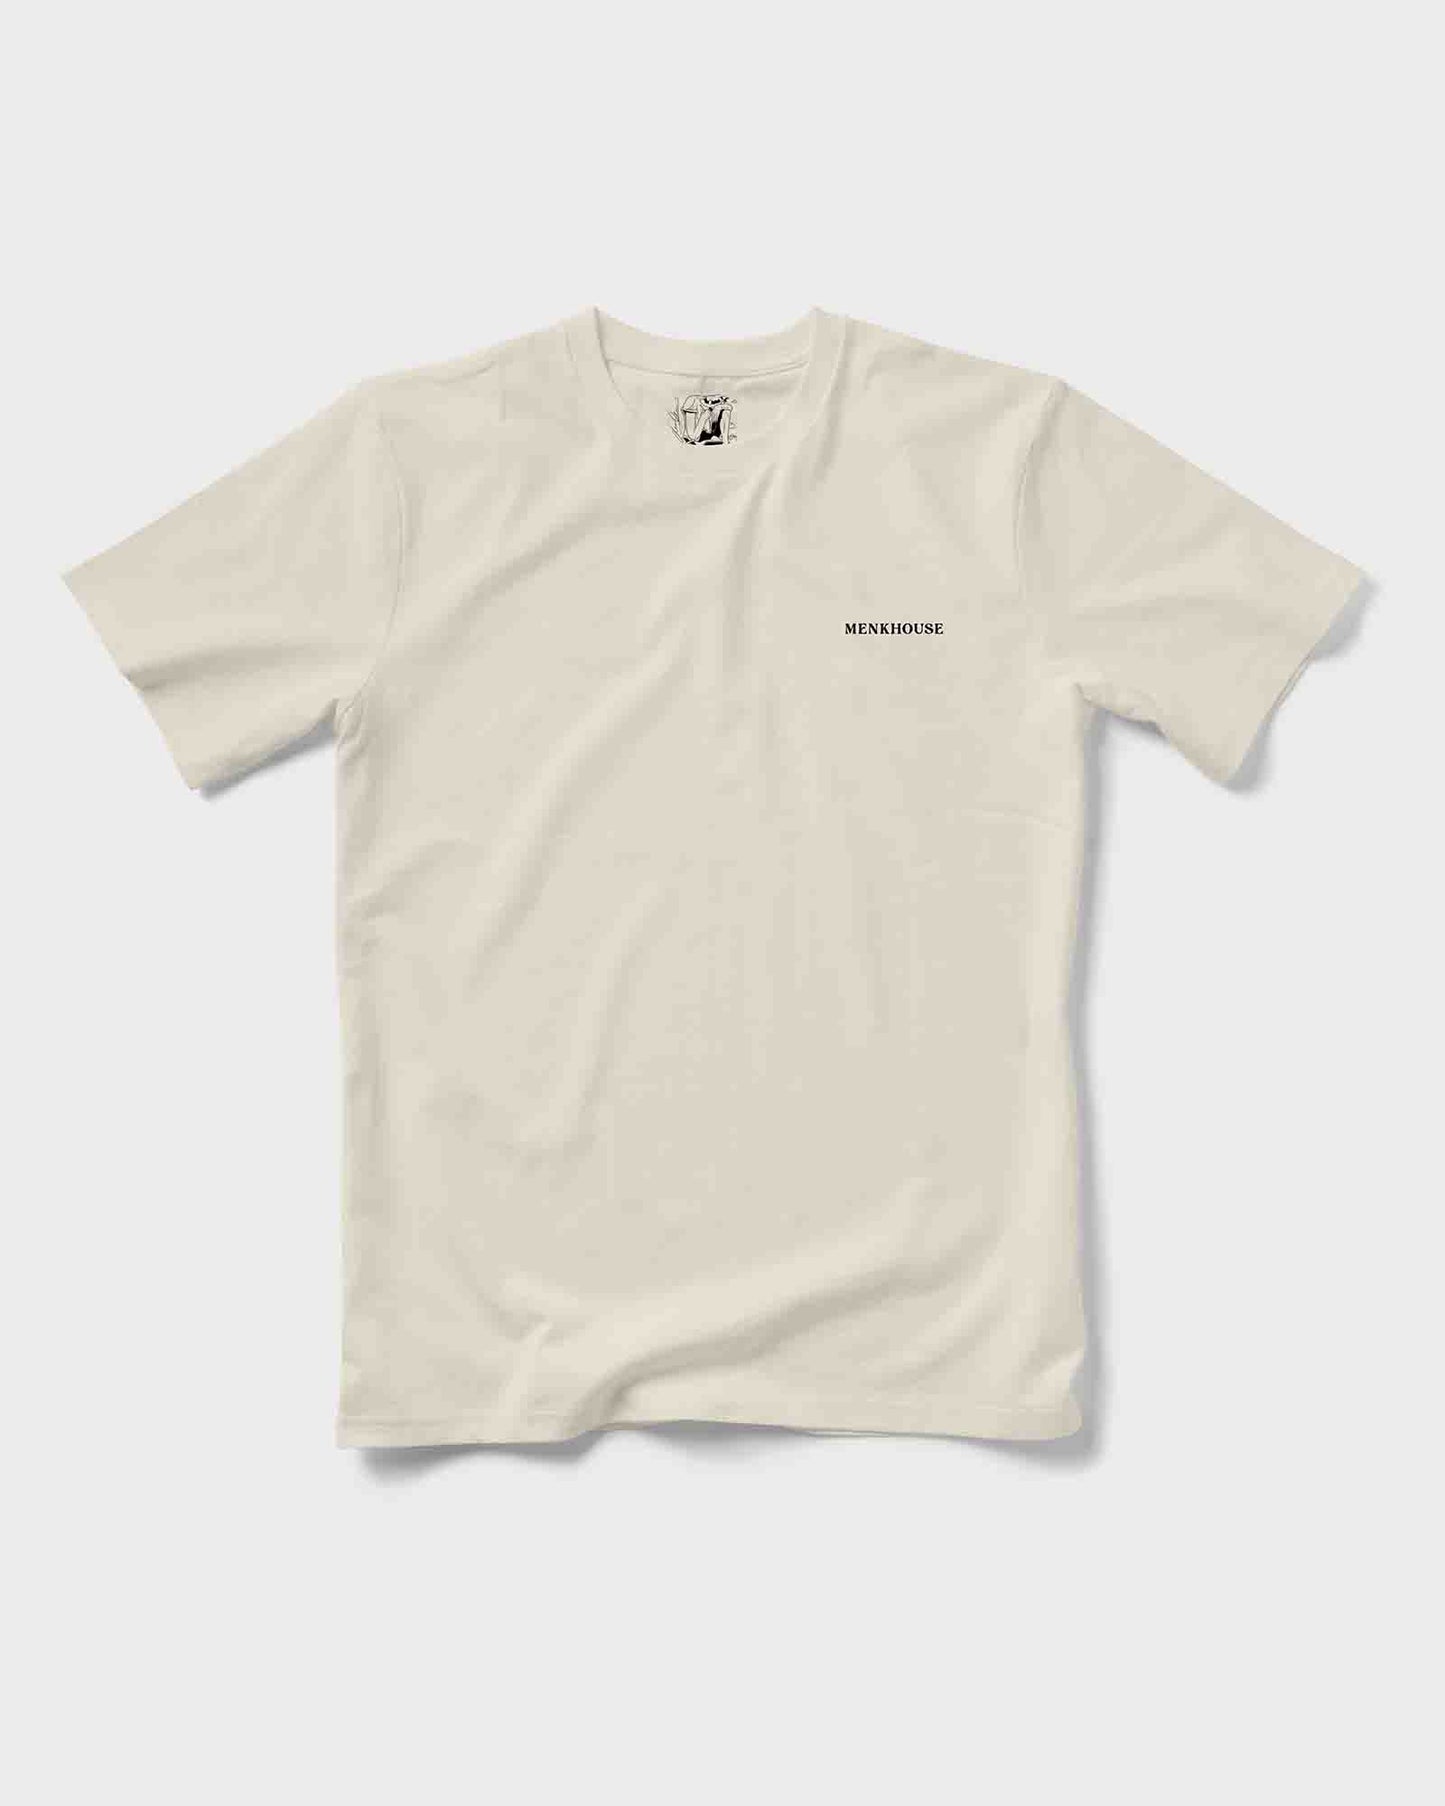 Surf Salty T-Shirt Front & Backprint Unisex